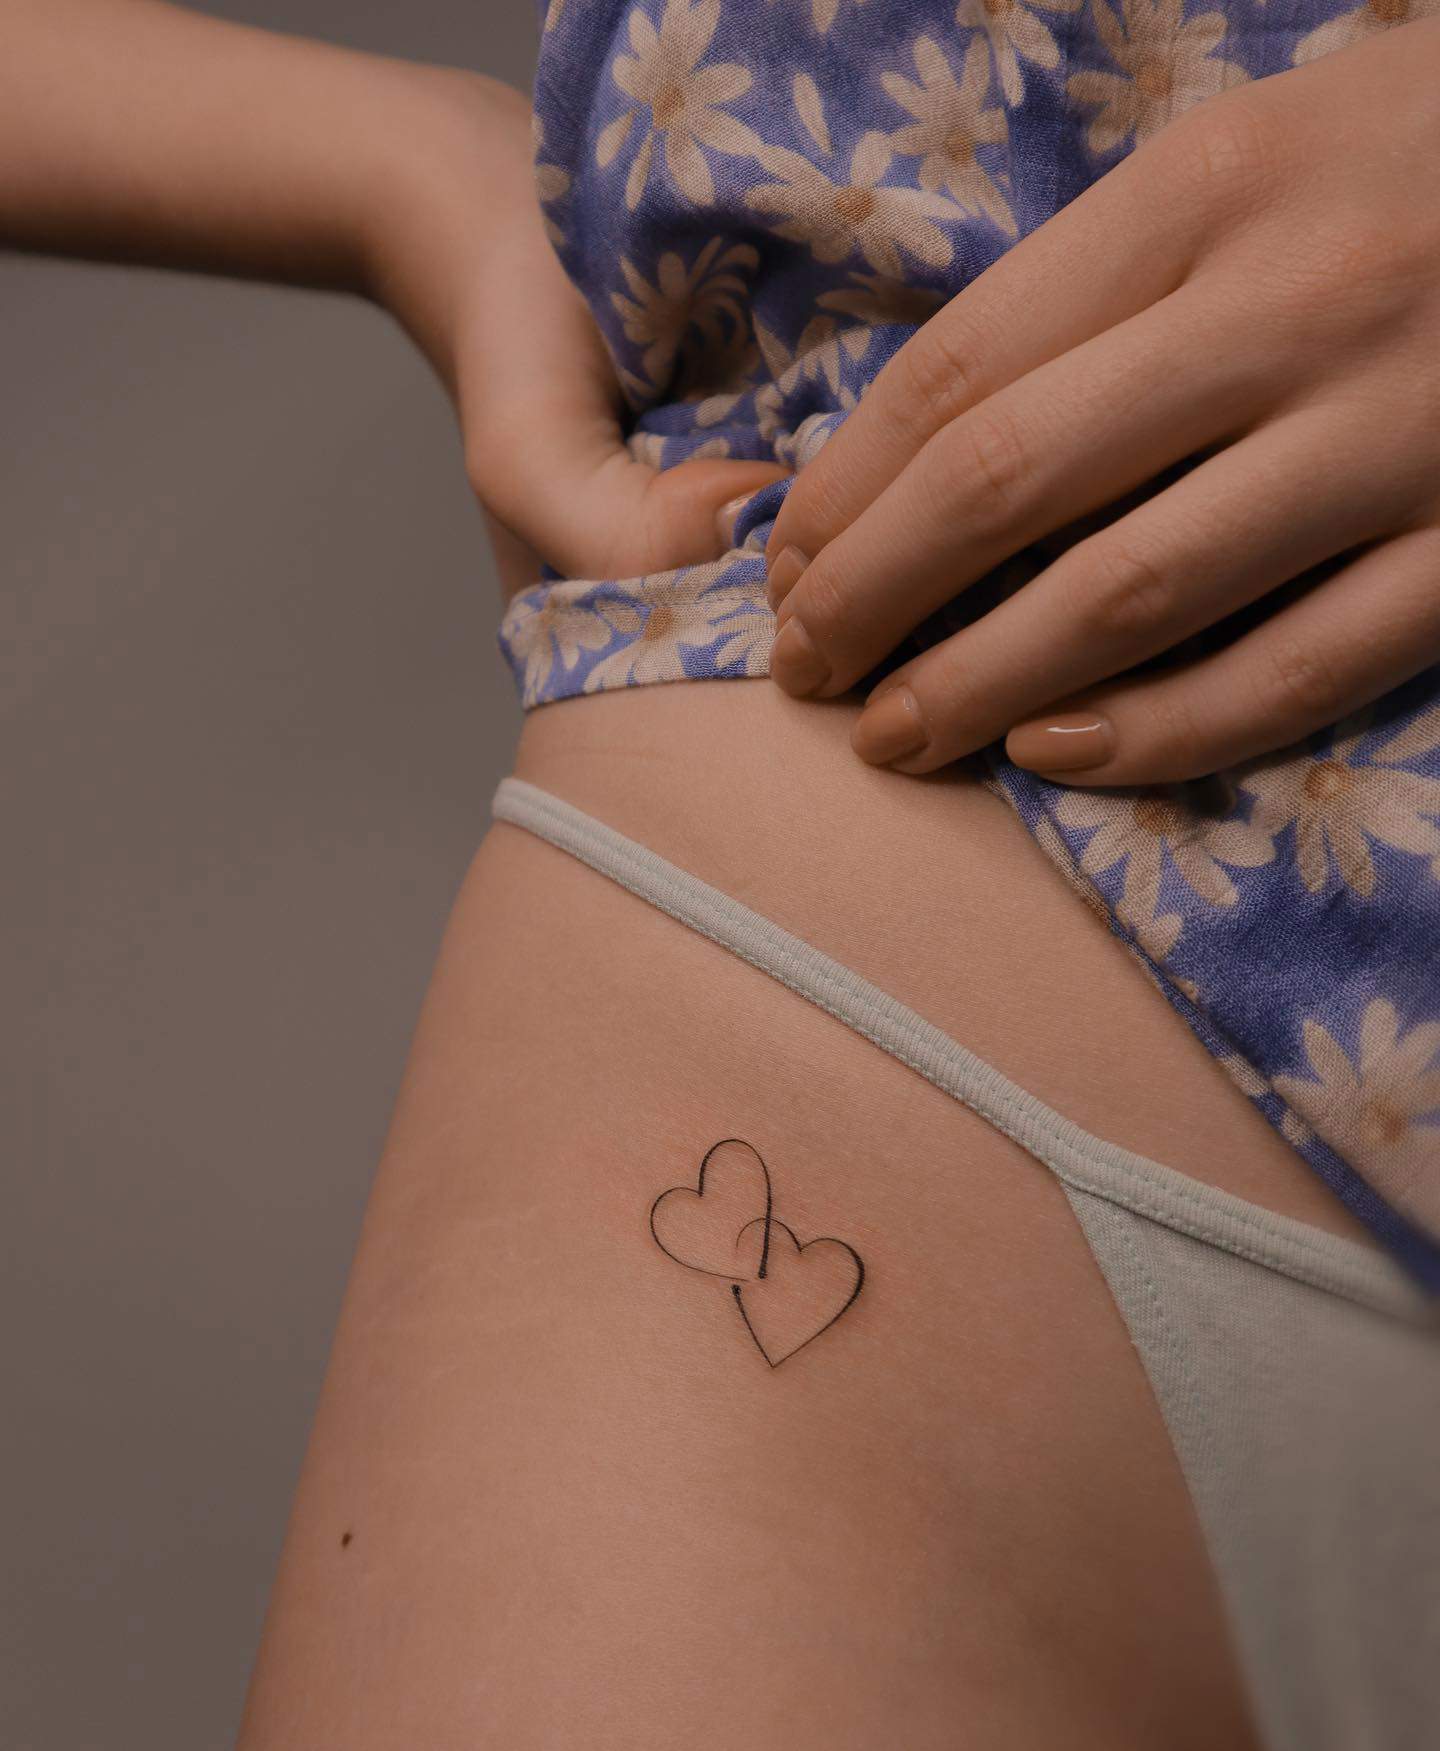 Tatuaje mujer sexy corazones